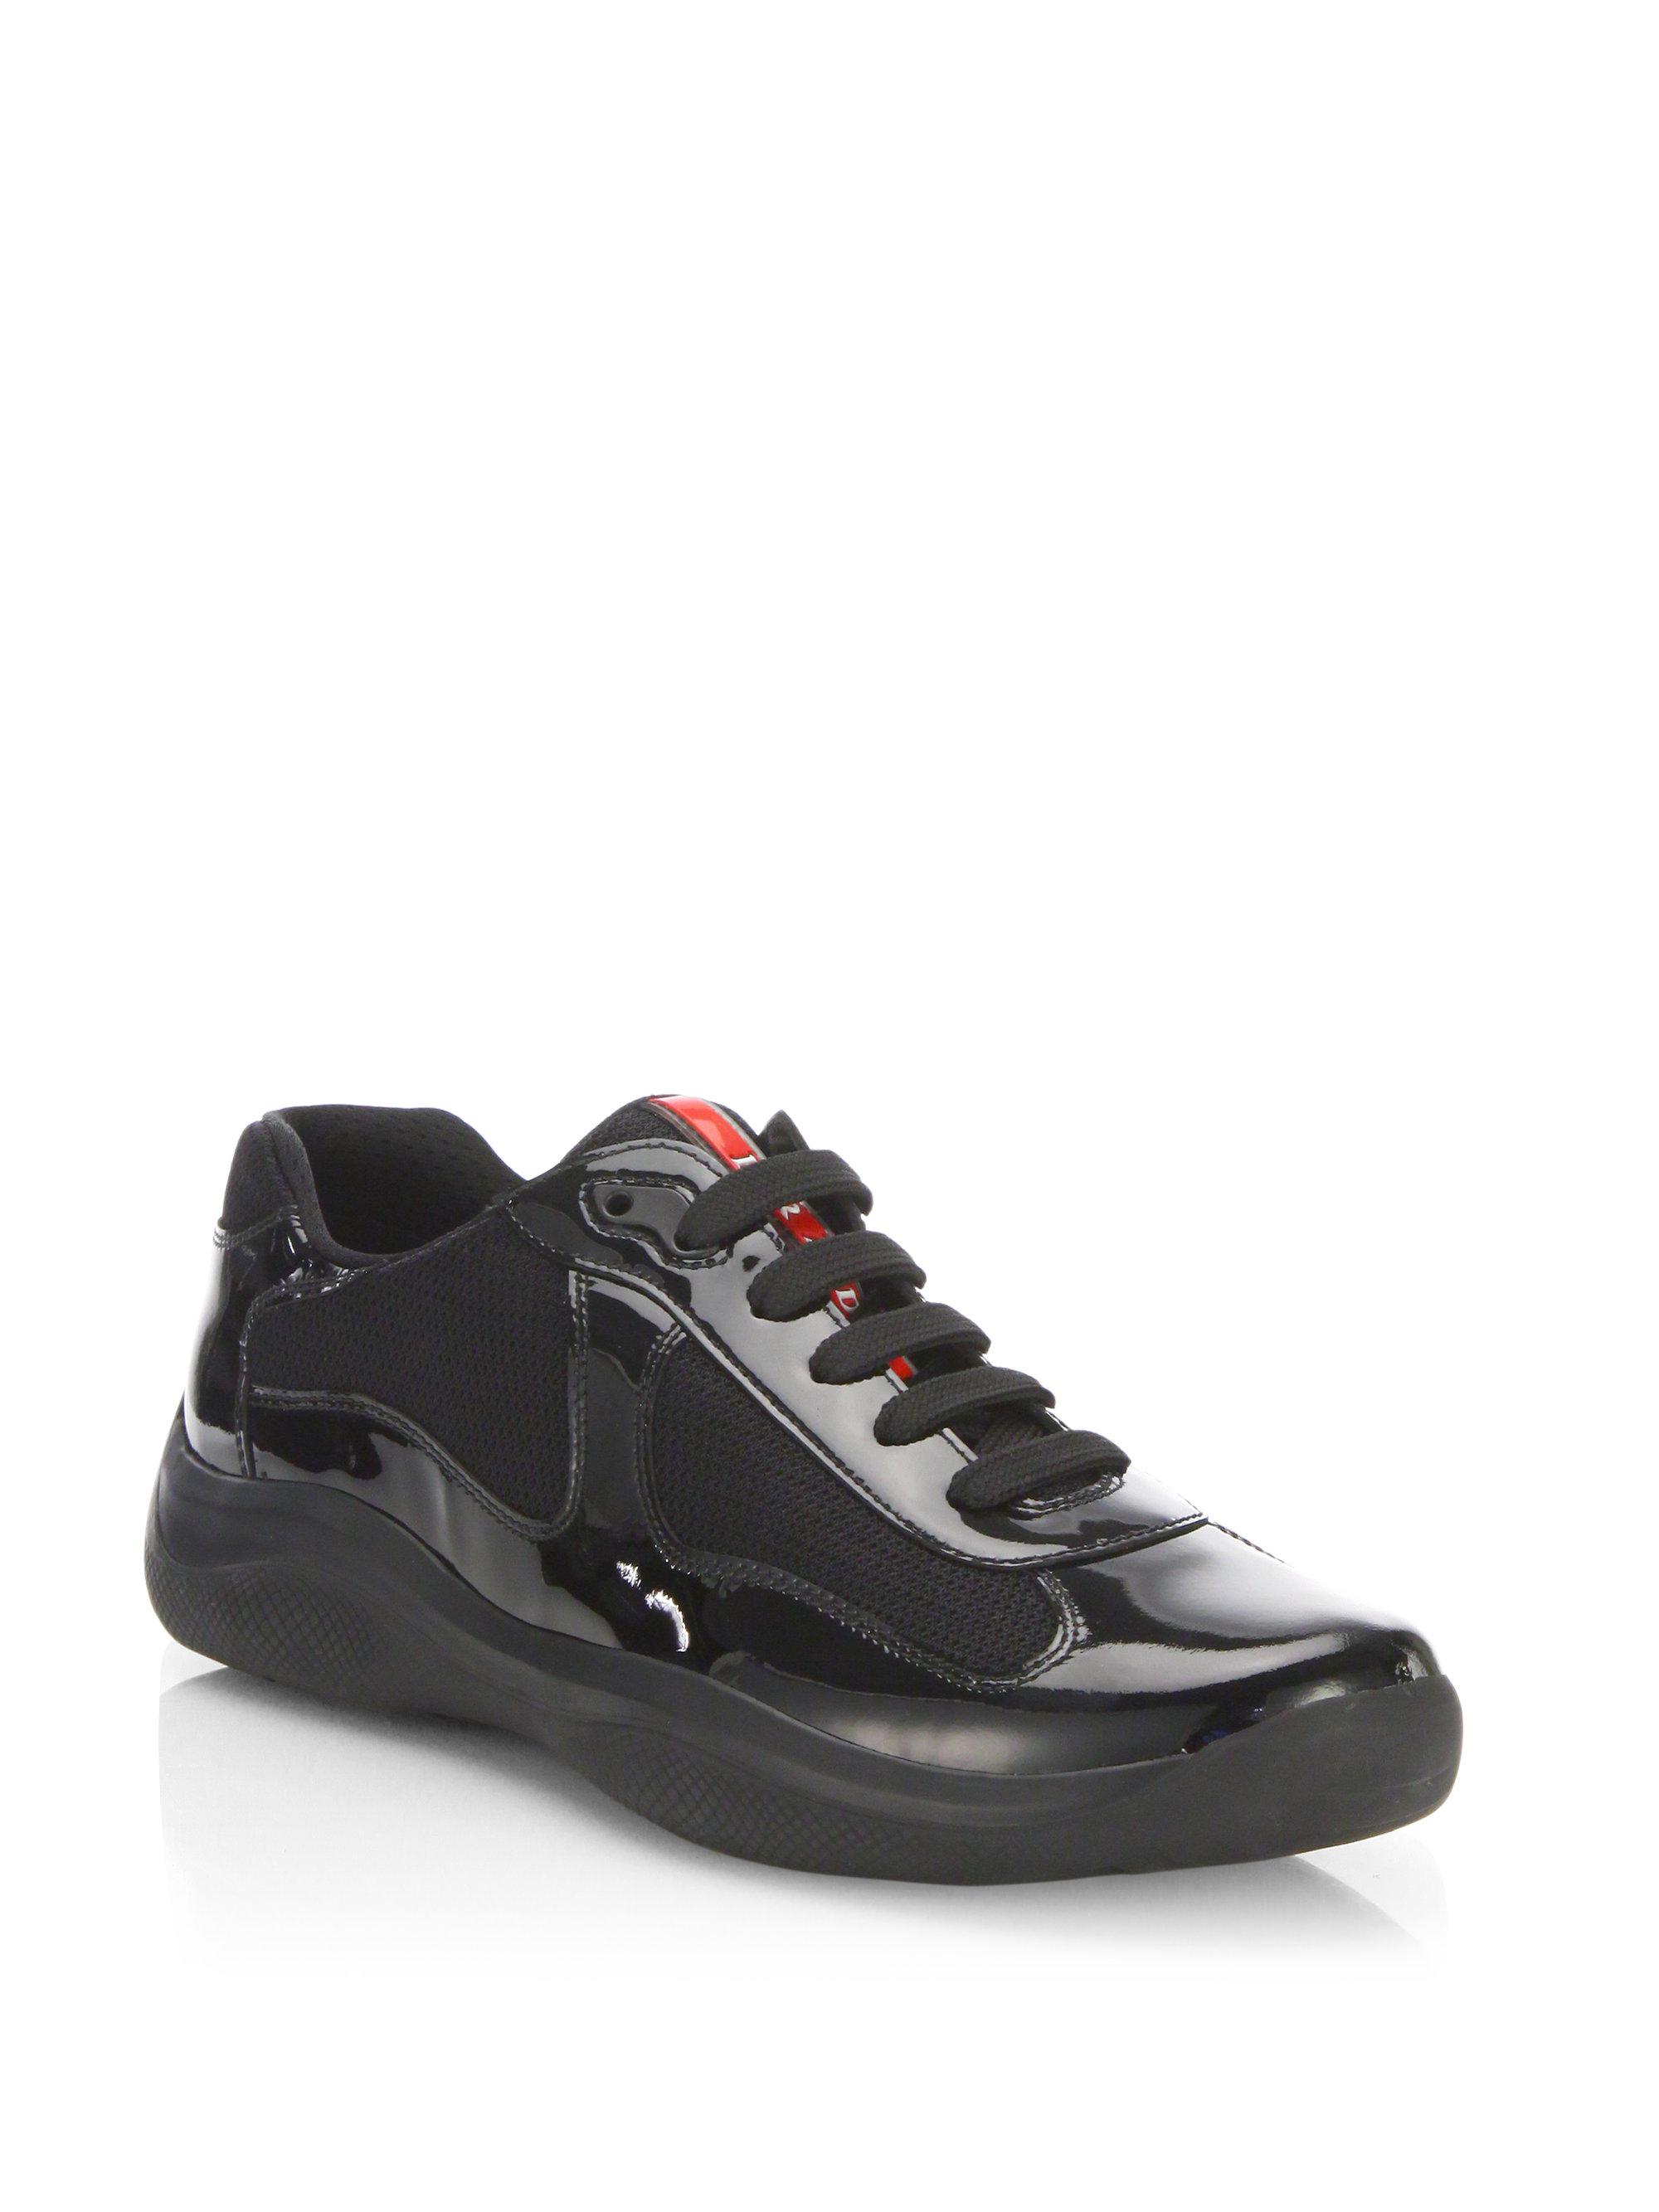 prada patent leather high top sneakers